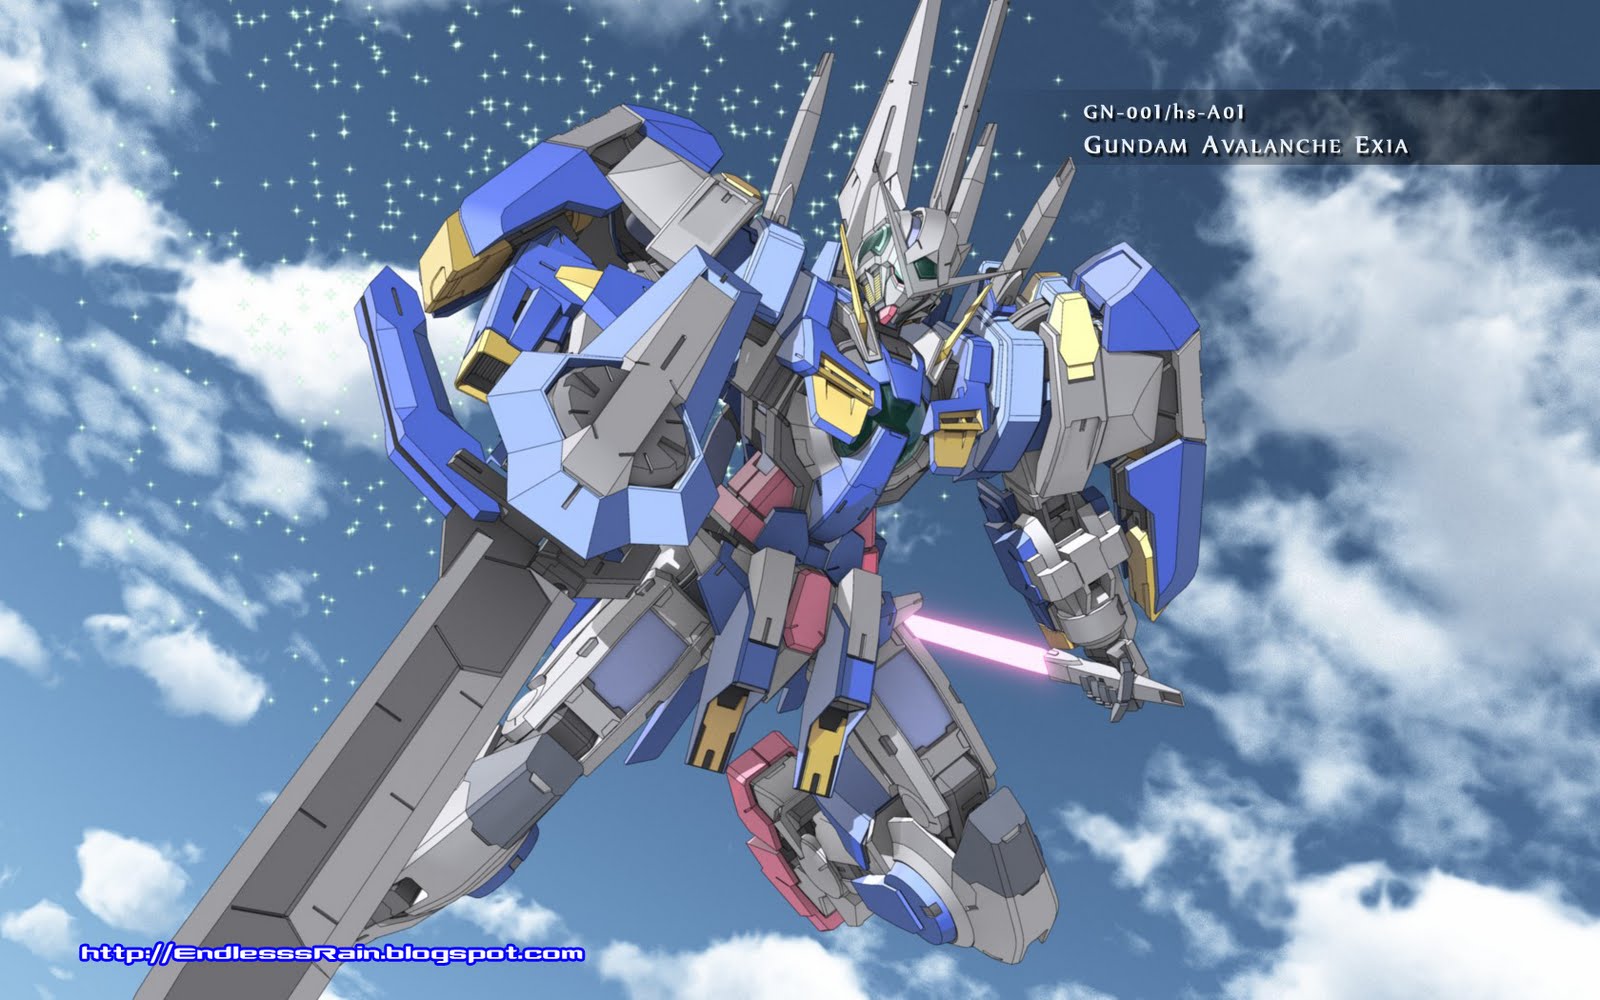 Free Gundam Wing Wallpaper Wallpaper Gundam Avalanche Exia Anime 1600x1000 Wallpaper Teahub Io